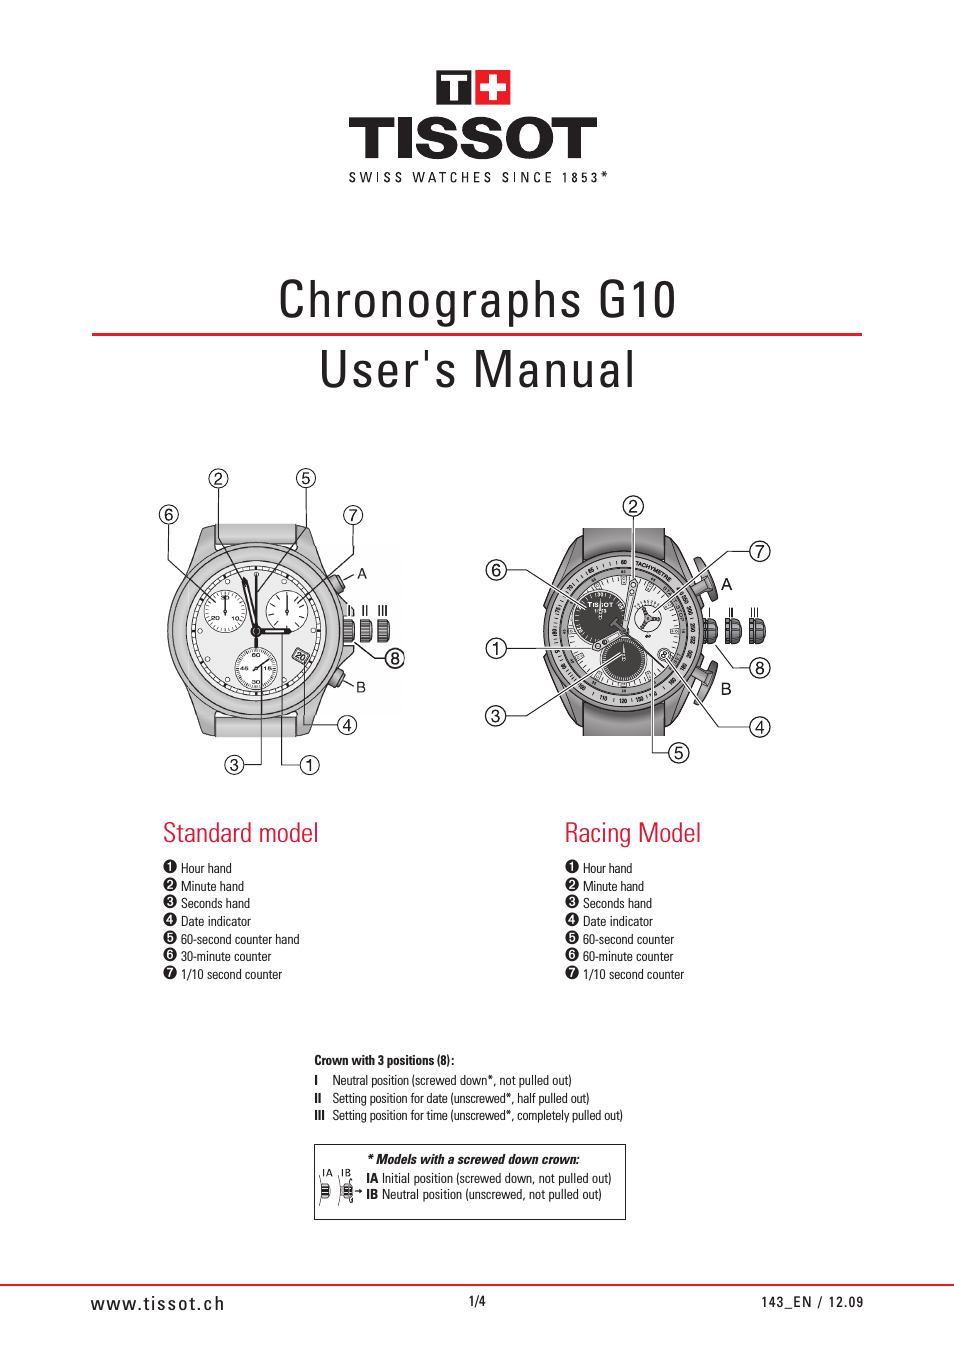 Chronographs Watch G10